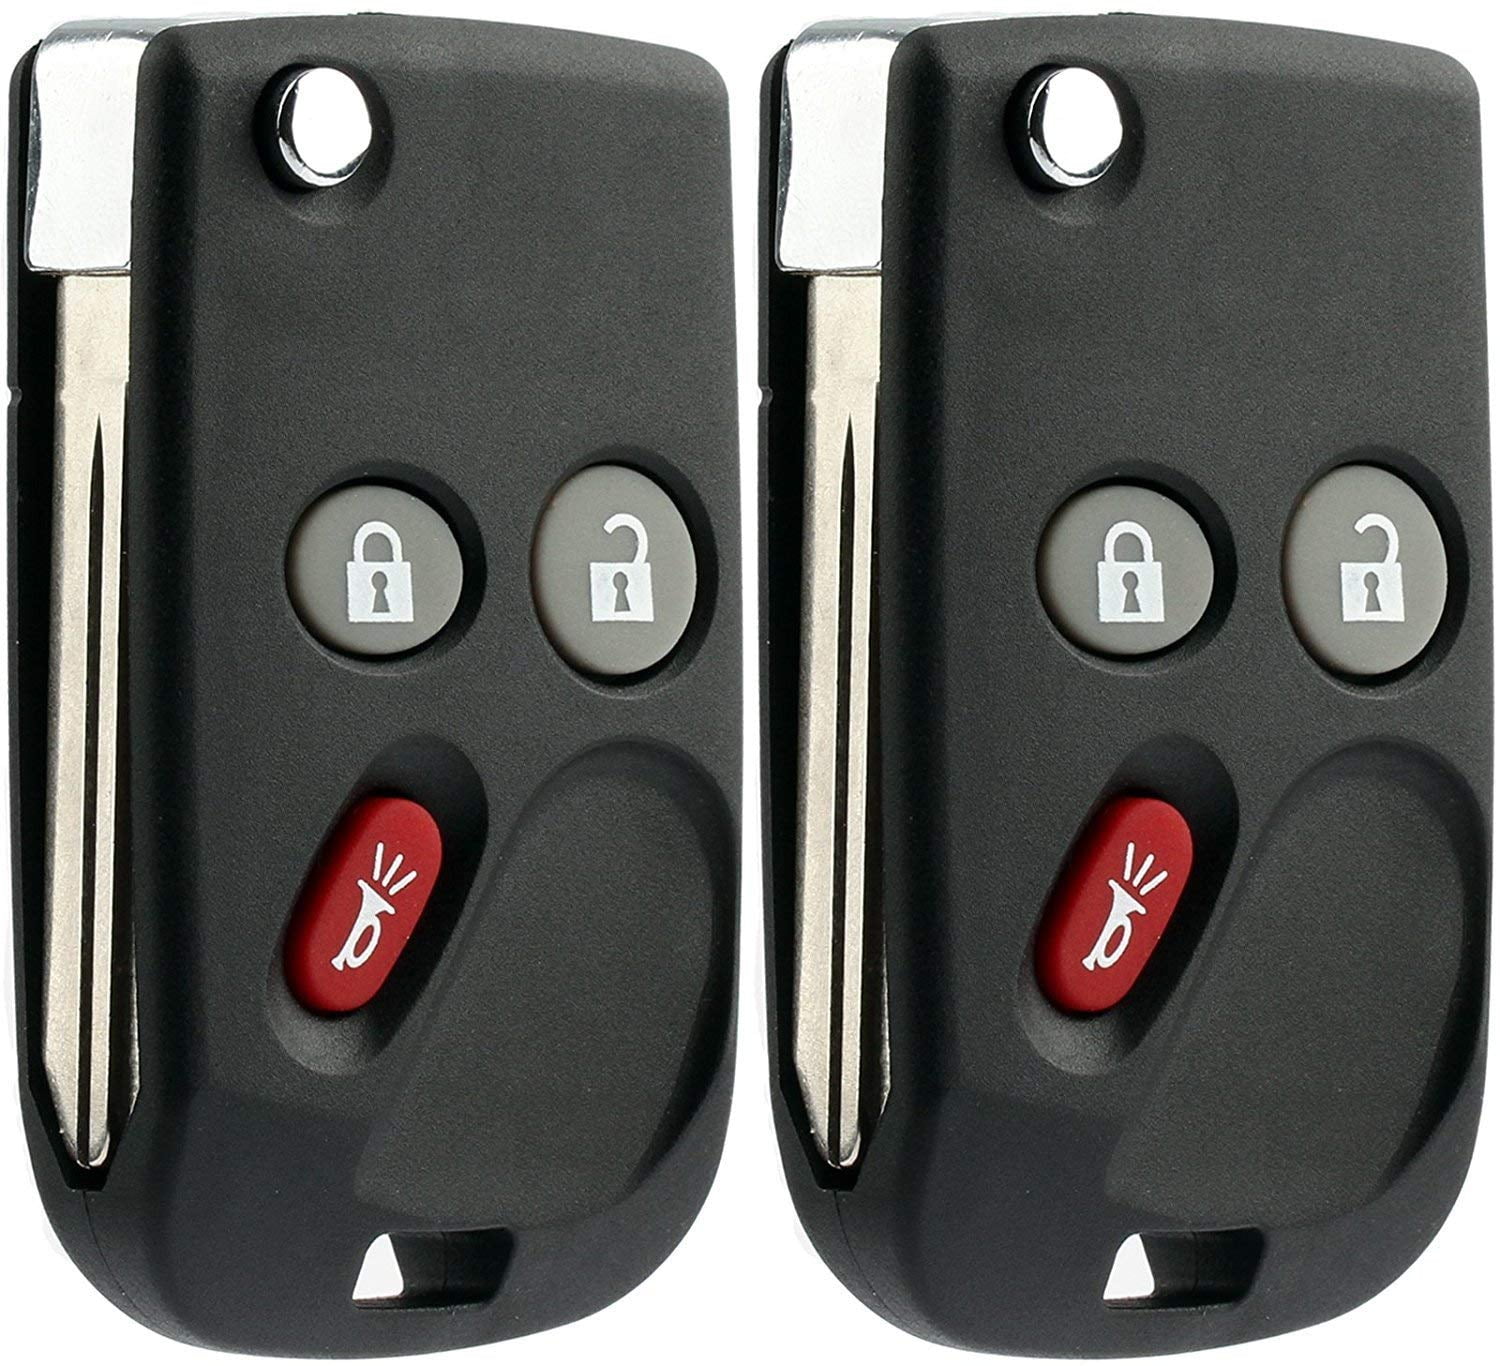 KeylessOption Keyless Entry Remote Control Car Key Fob Replacement